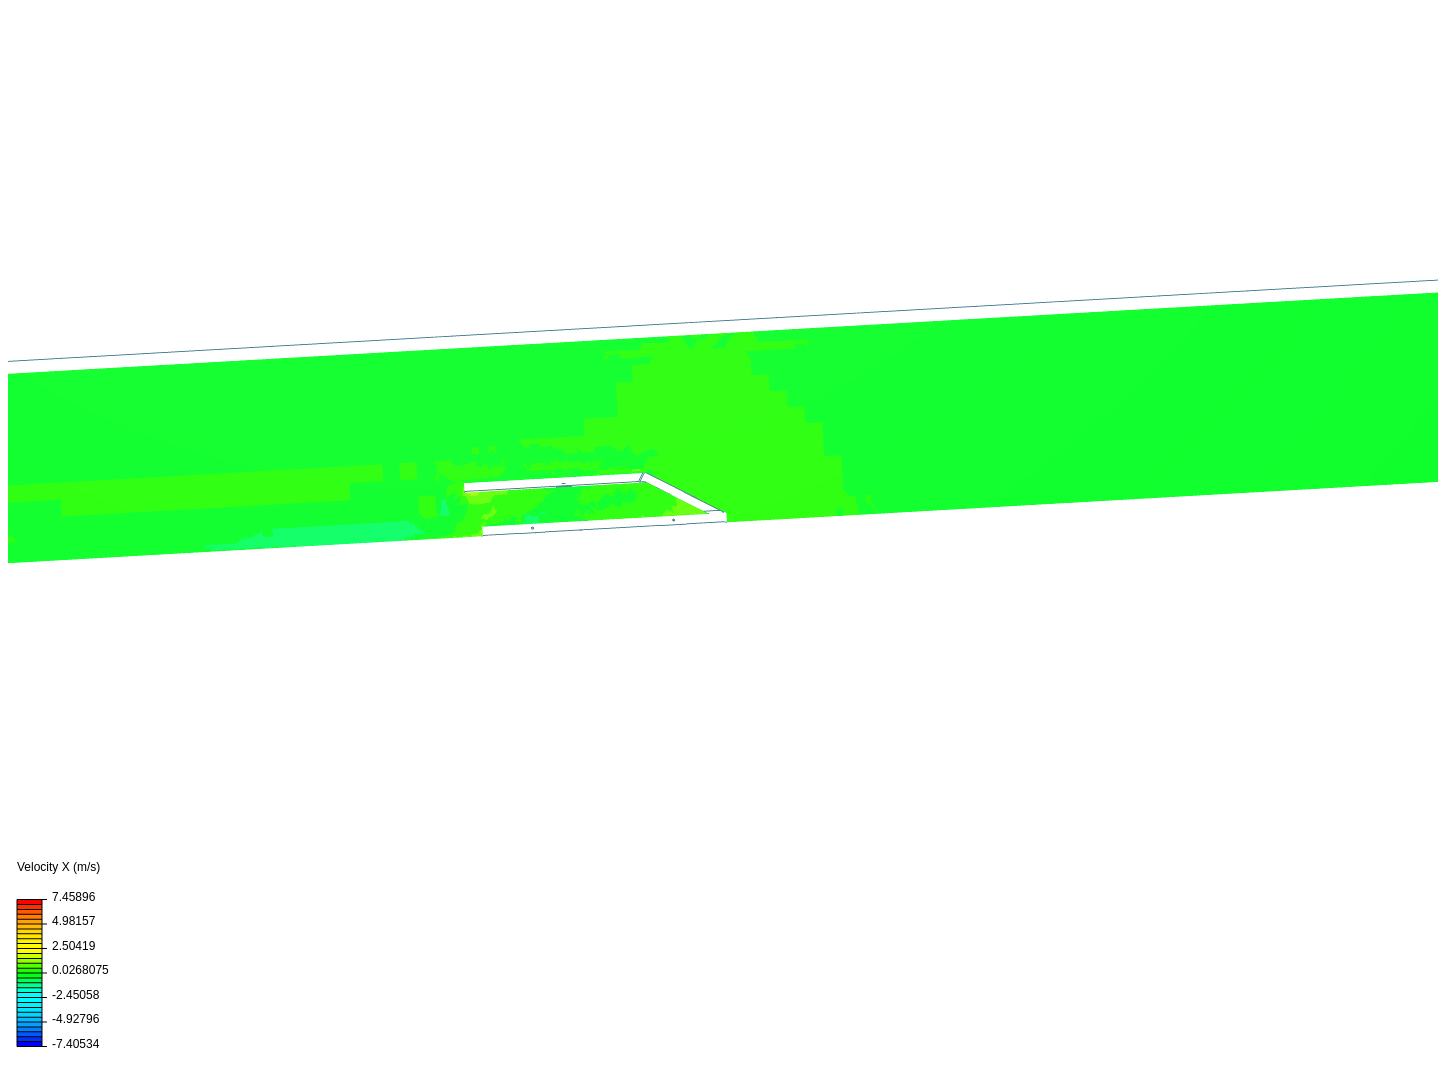 test simulation image